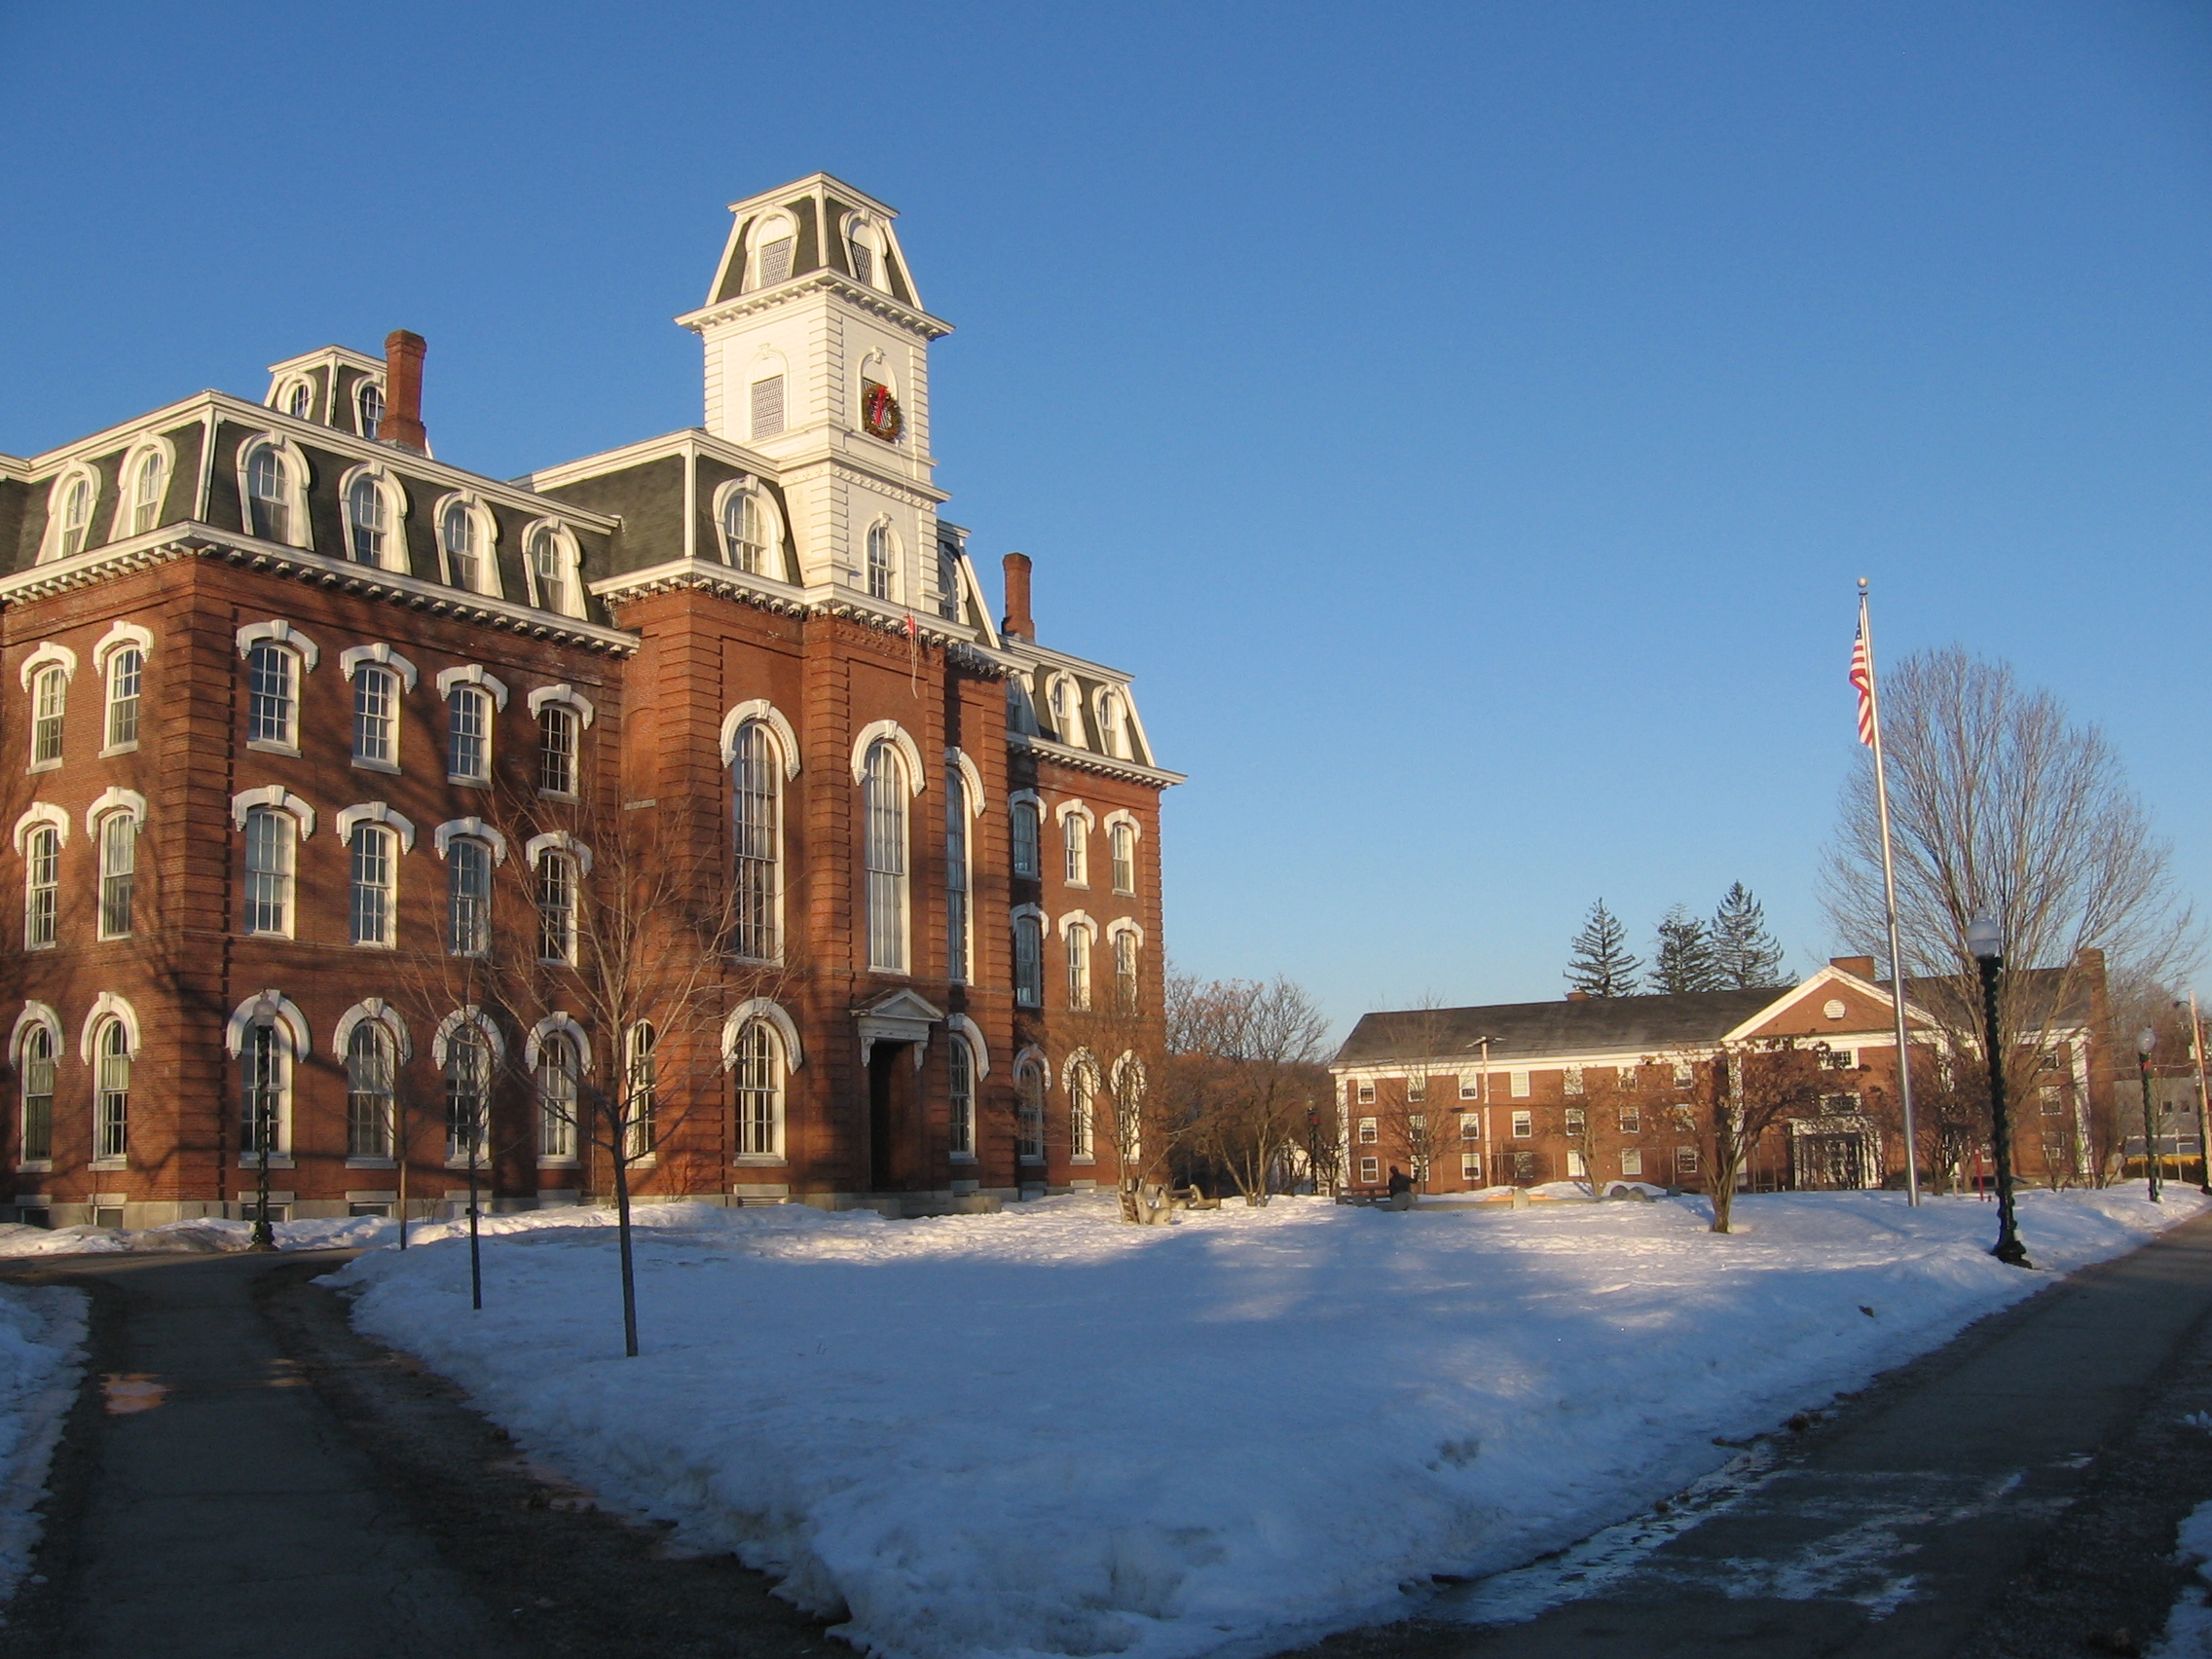 Vermont College campus - KL Going